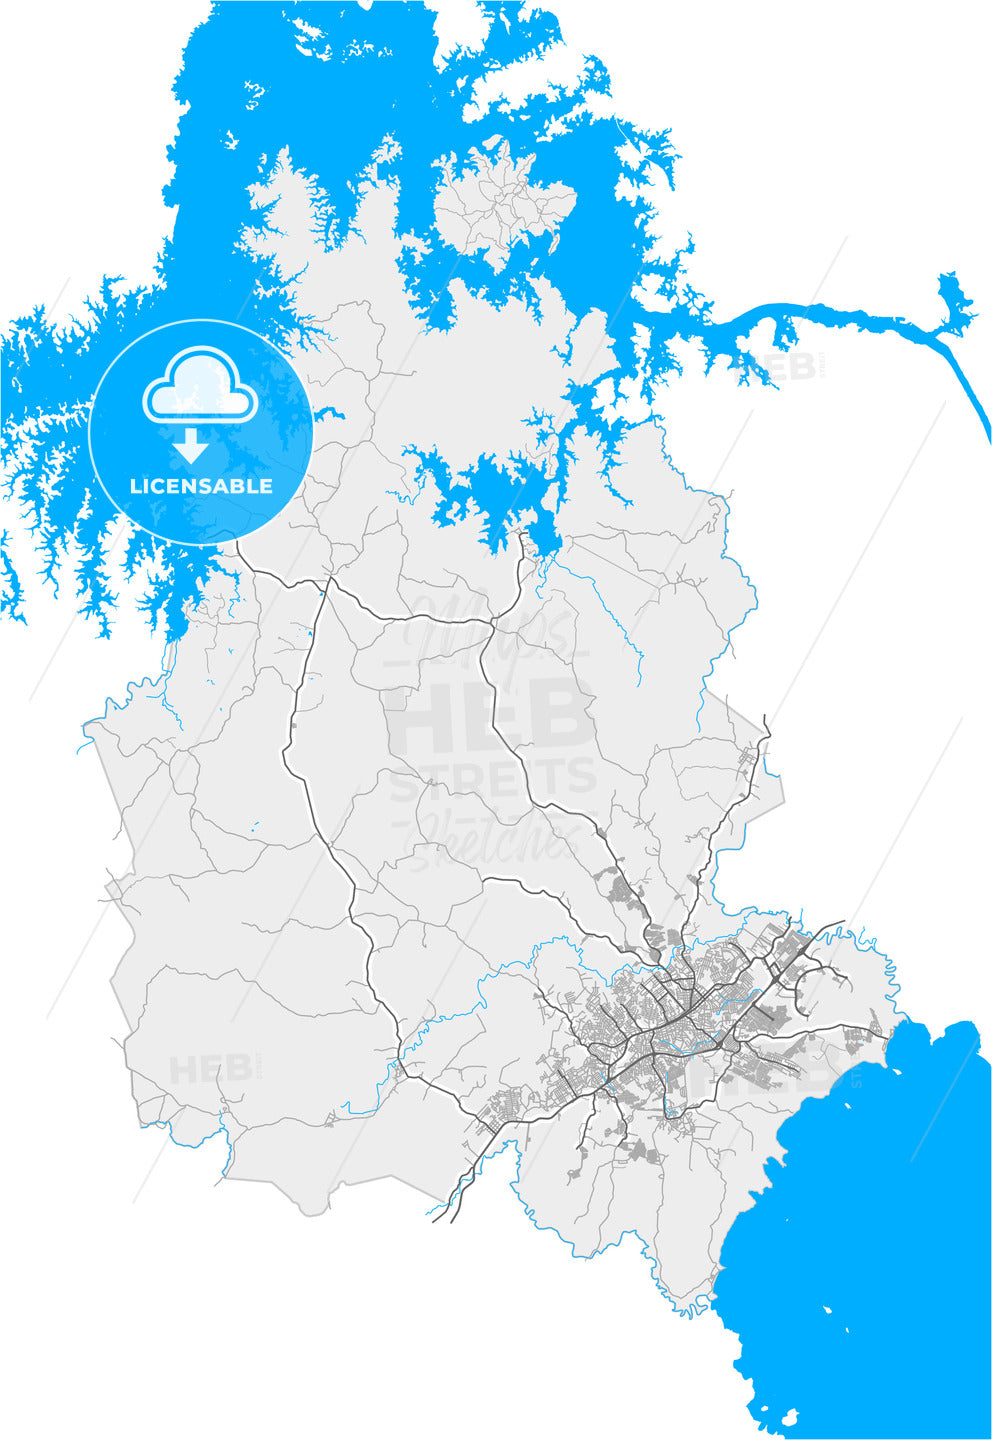 La Chorrera, Panamá Oeste, Panama, high quality vector map